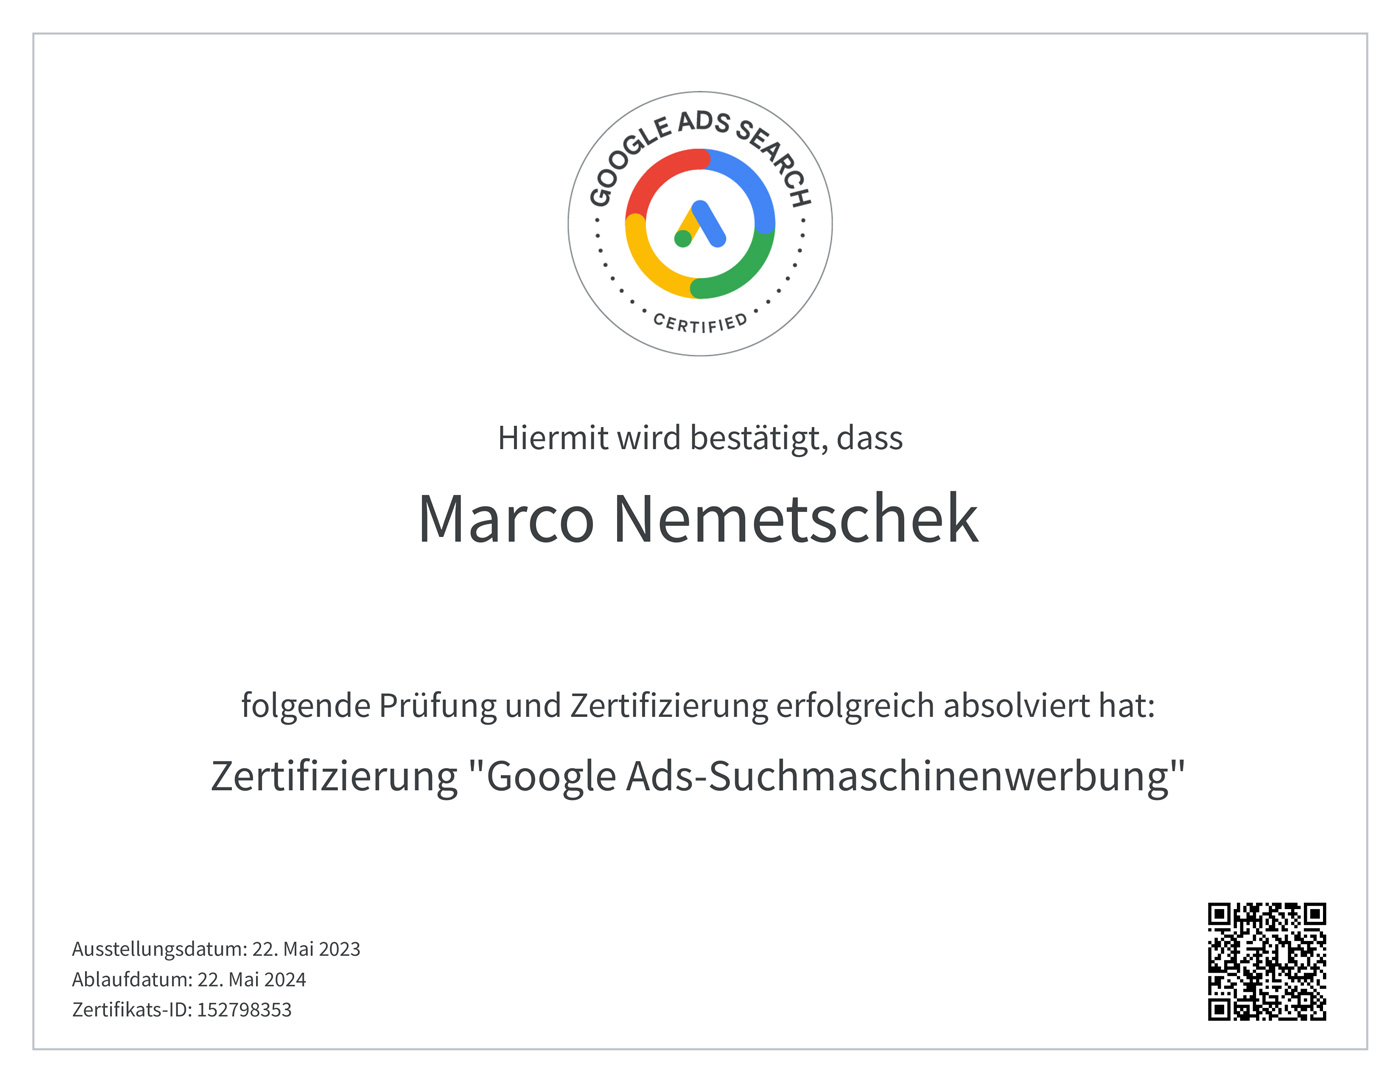 Zertifizierung "Google Ads-Suchmaschinenwerbung" 2023 - Marco Nemetschek